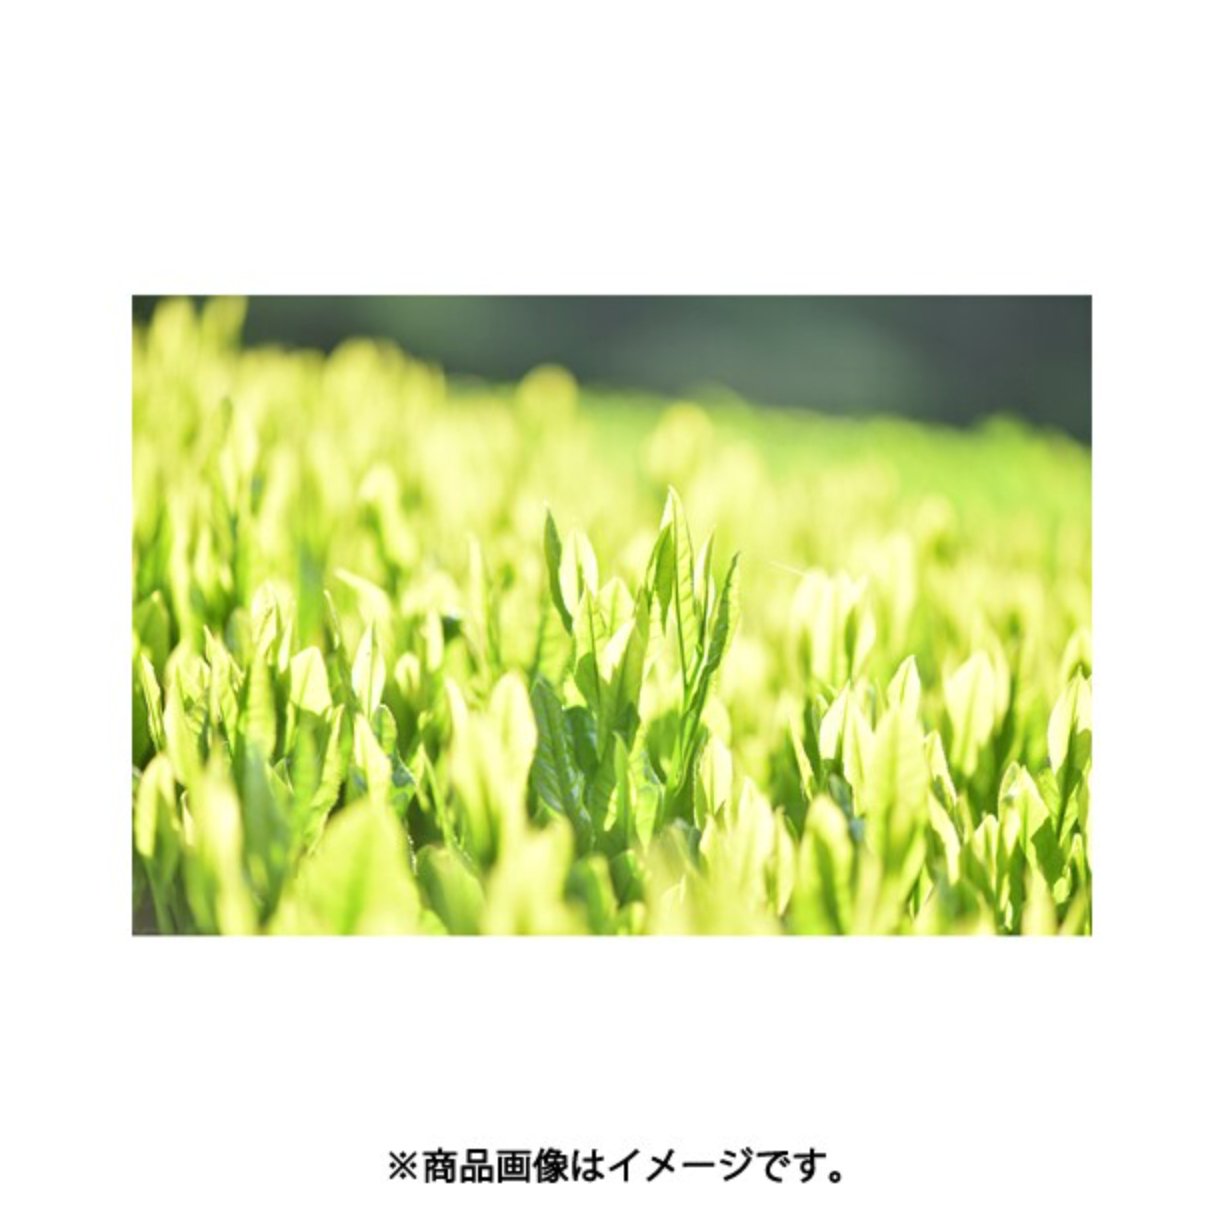 Hagiri JAS organically grown tea Ohira 100g - NihonMura